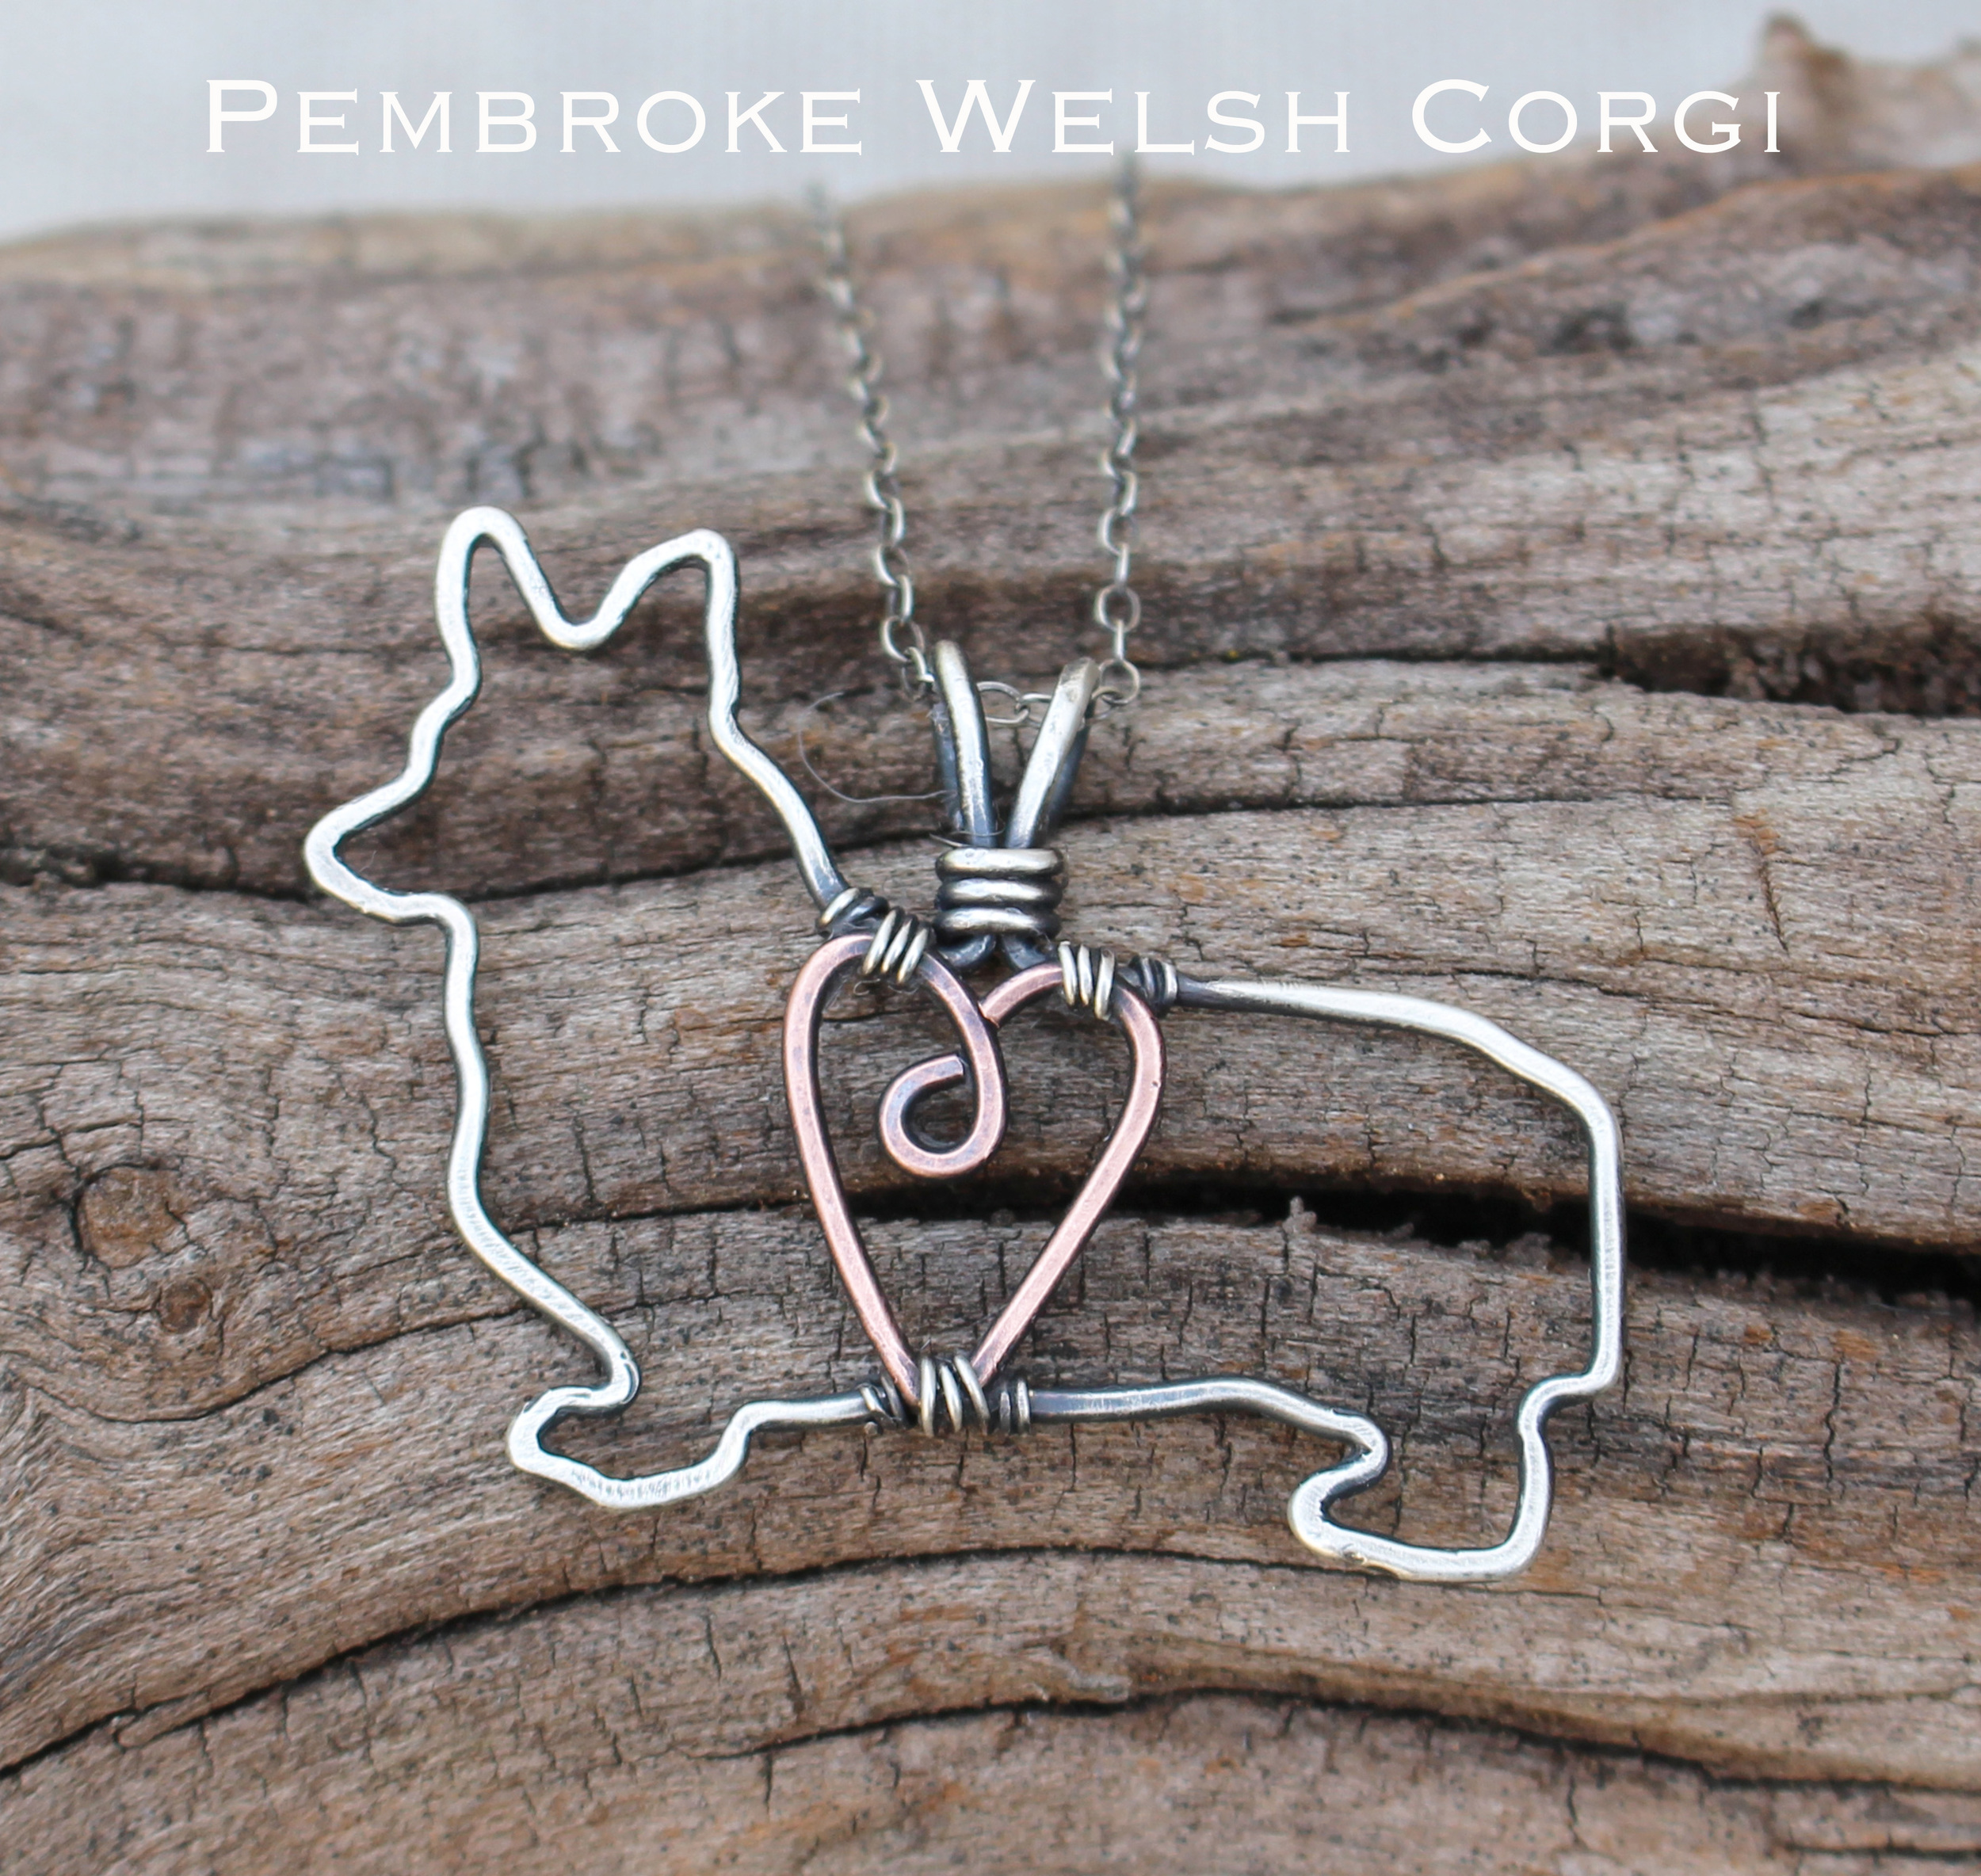 Pembroke Welsh Corgi2.jpg